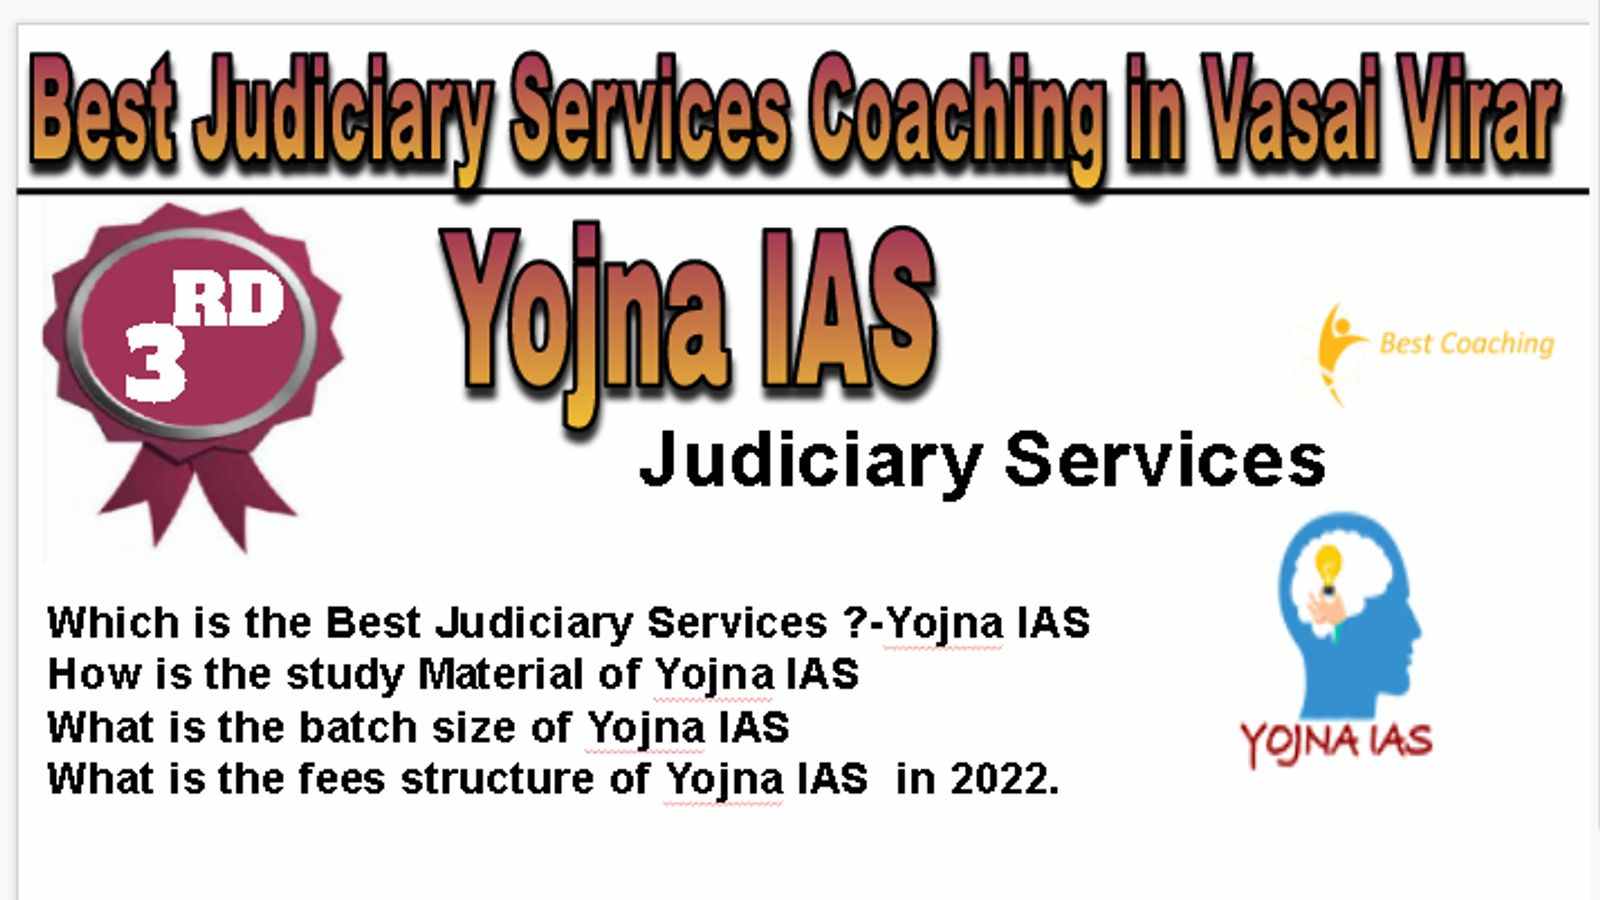 Rank 3 Best Judiciary Services Coaching in Vasai and Virar